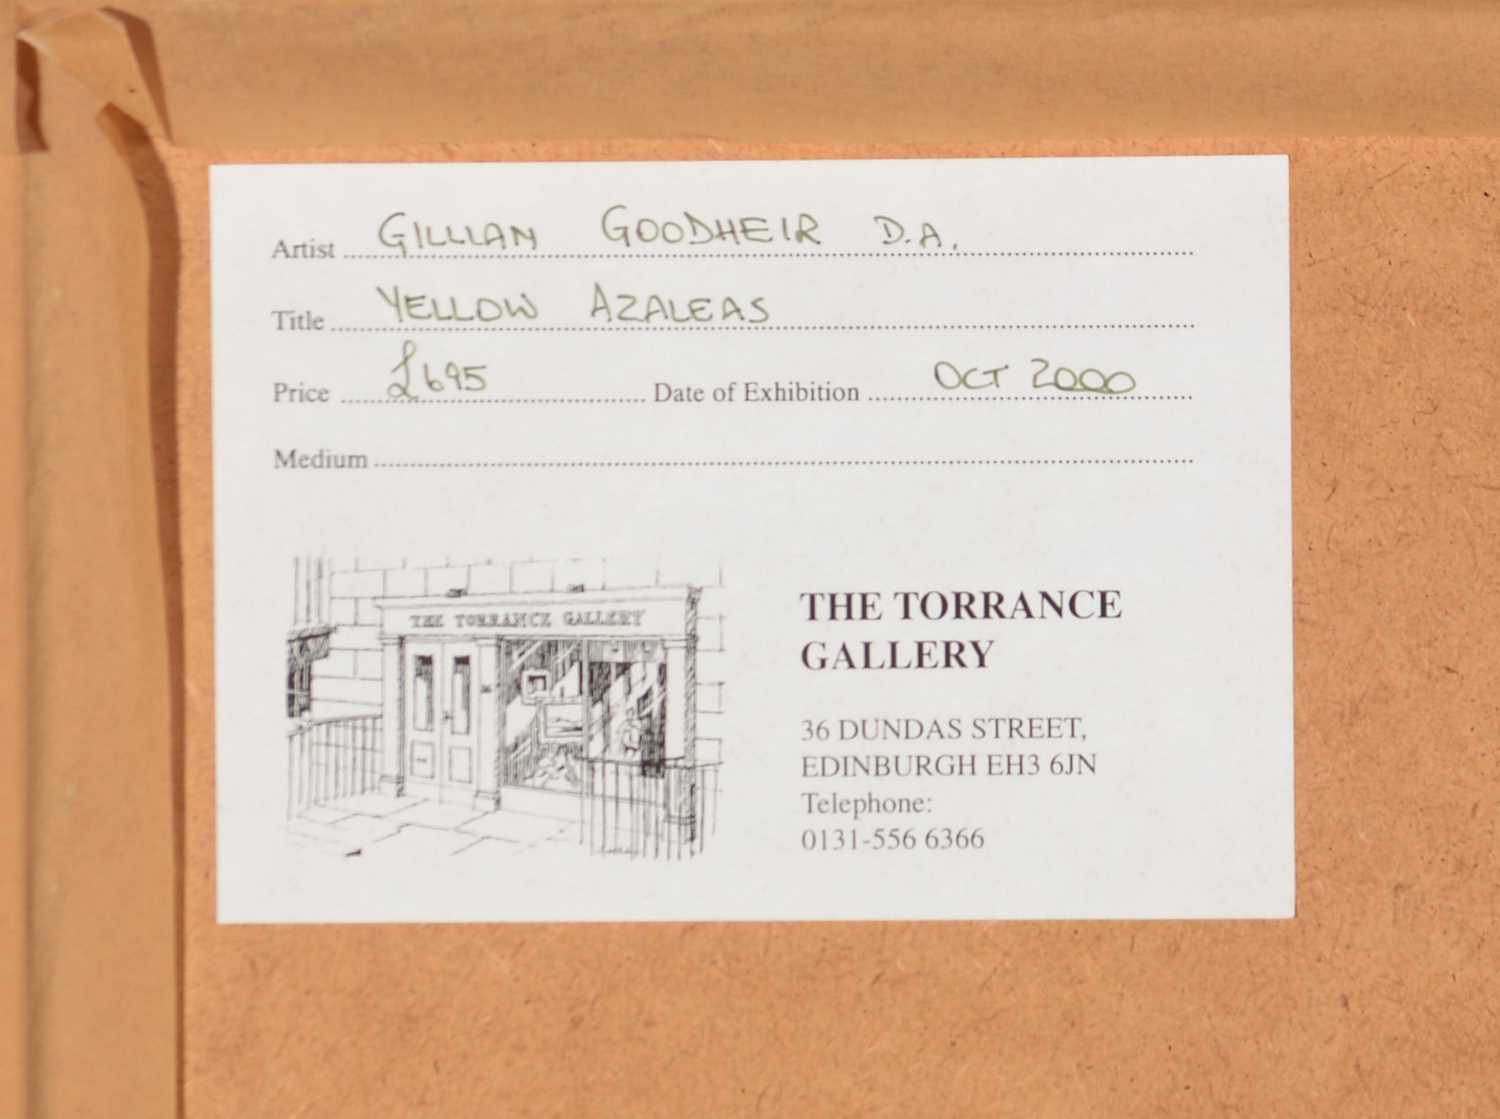 Gillian Goodheir -gouache - Image 4 of 4